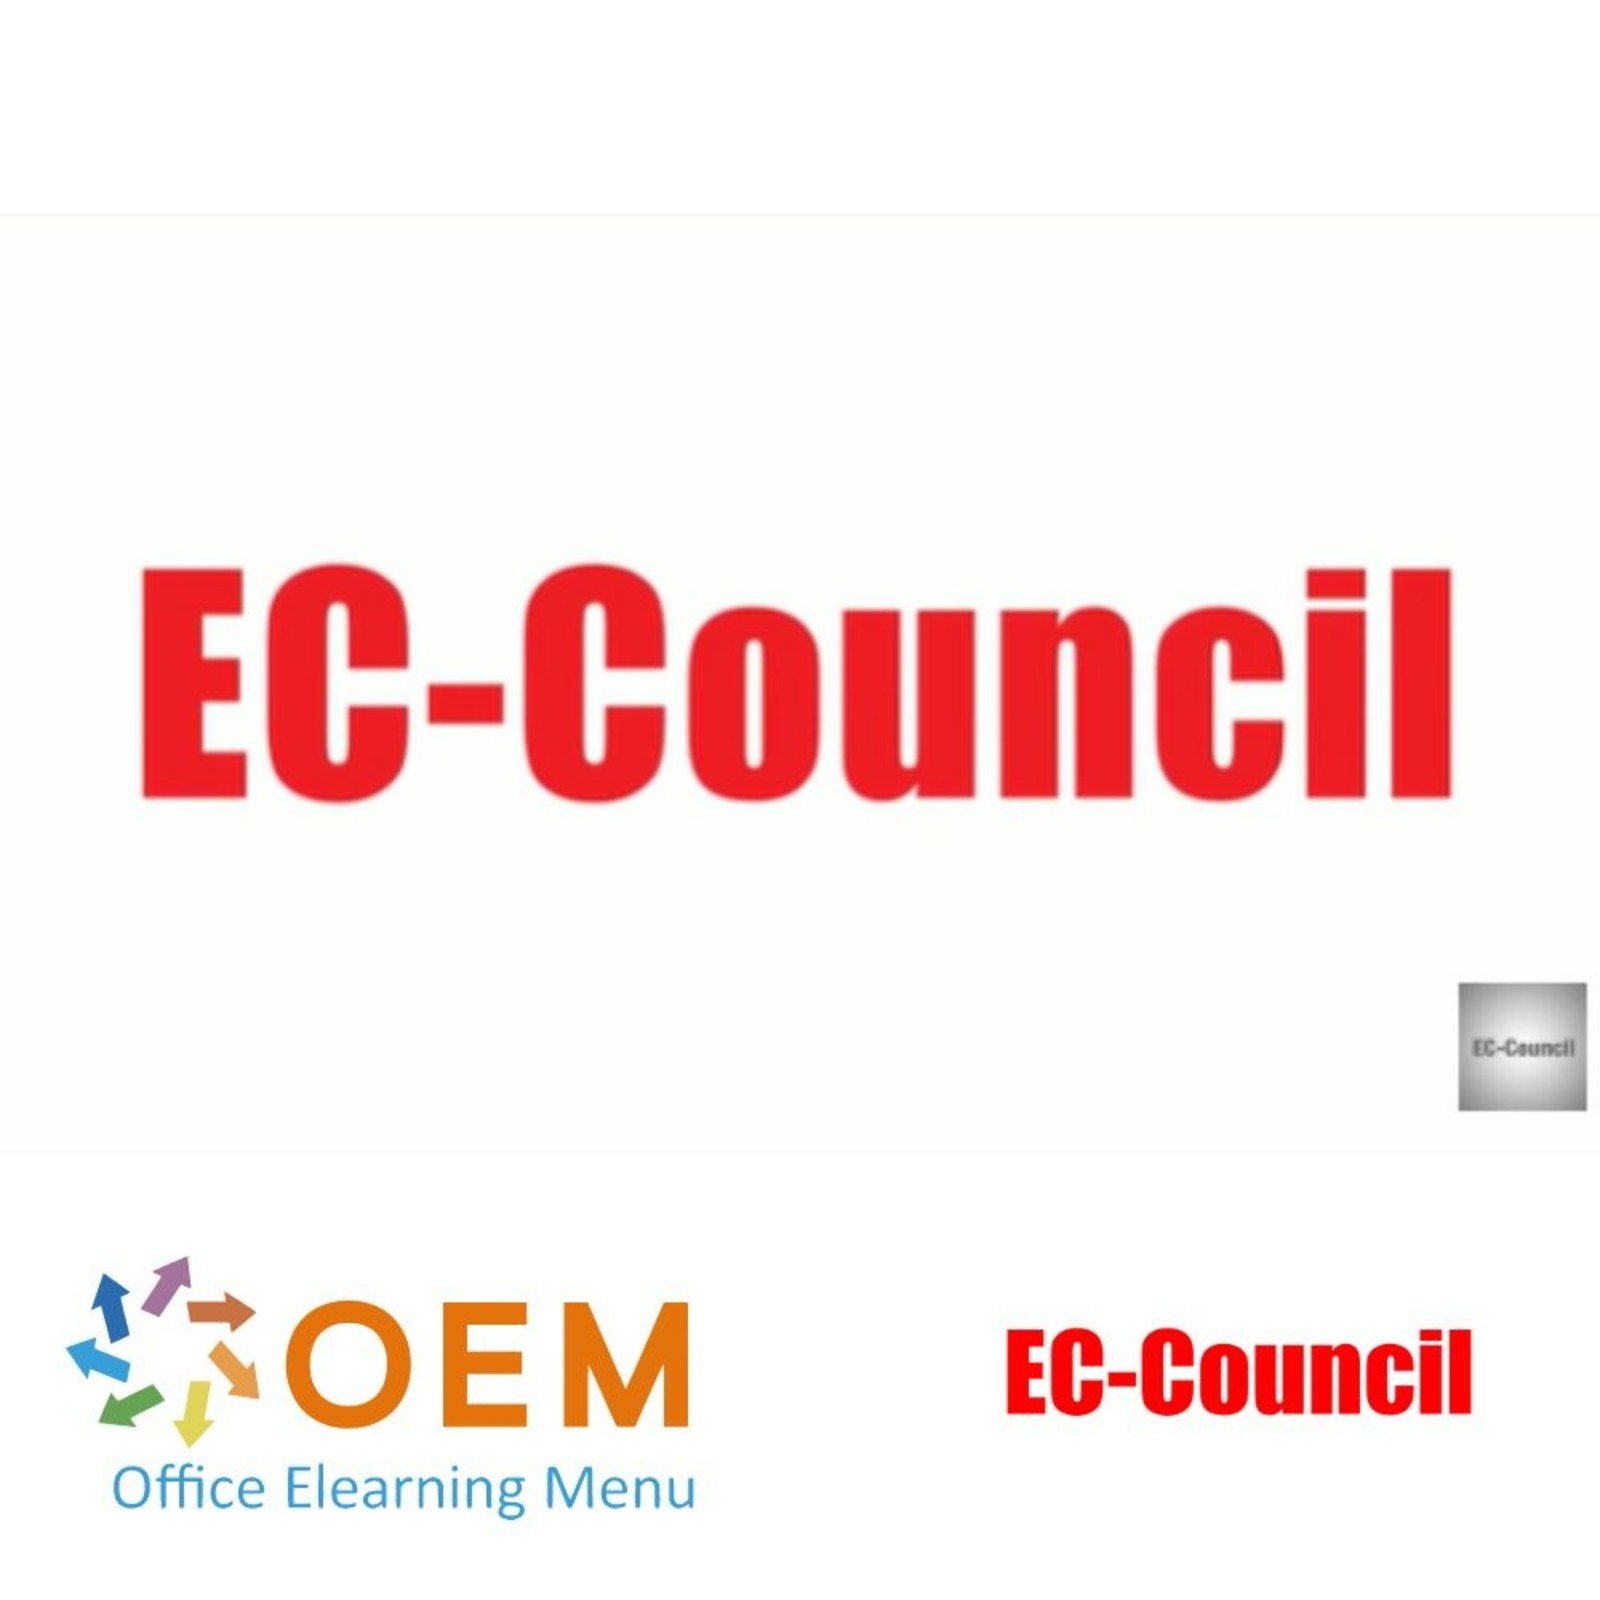 EC-Council Certified Secure Computer User (CSCU) Training